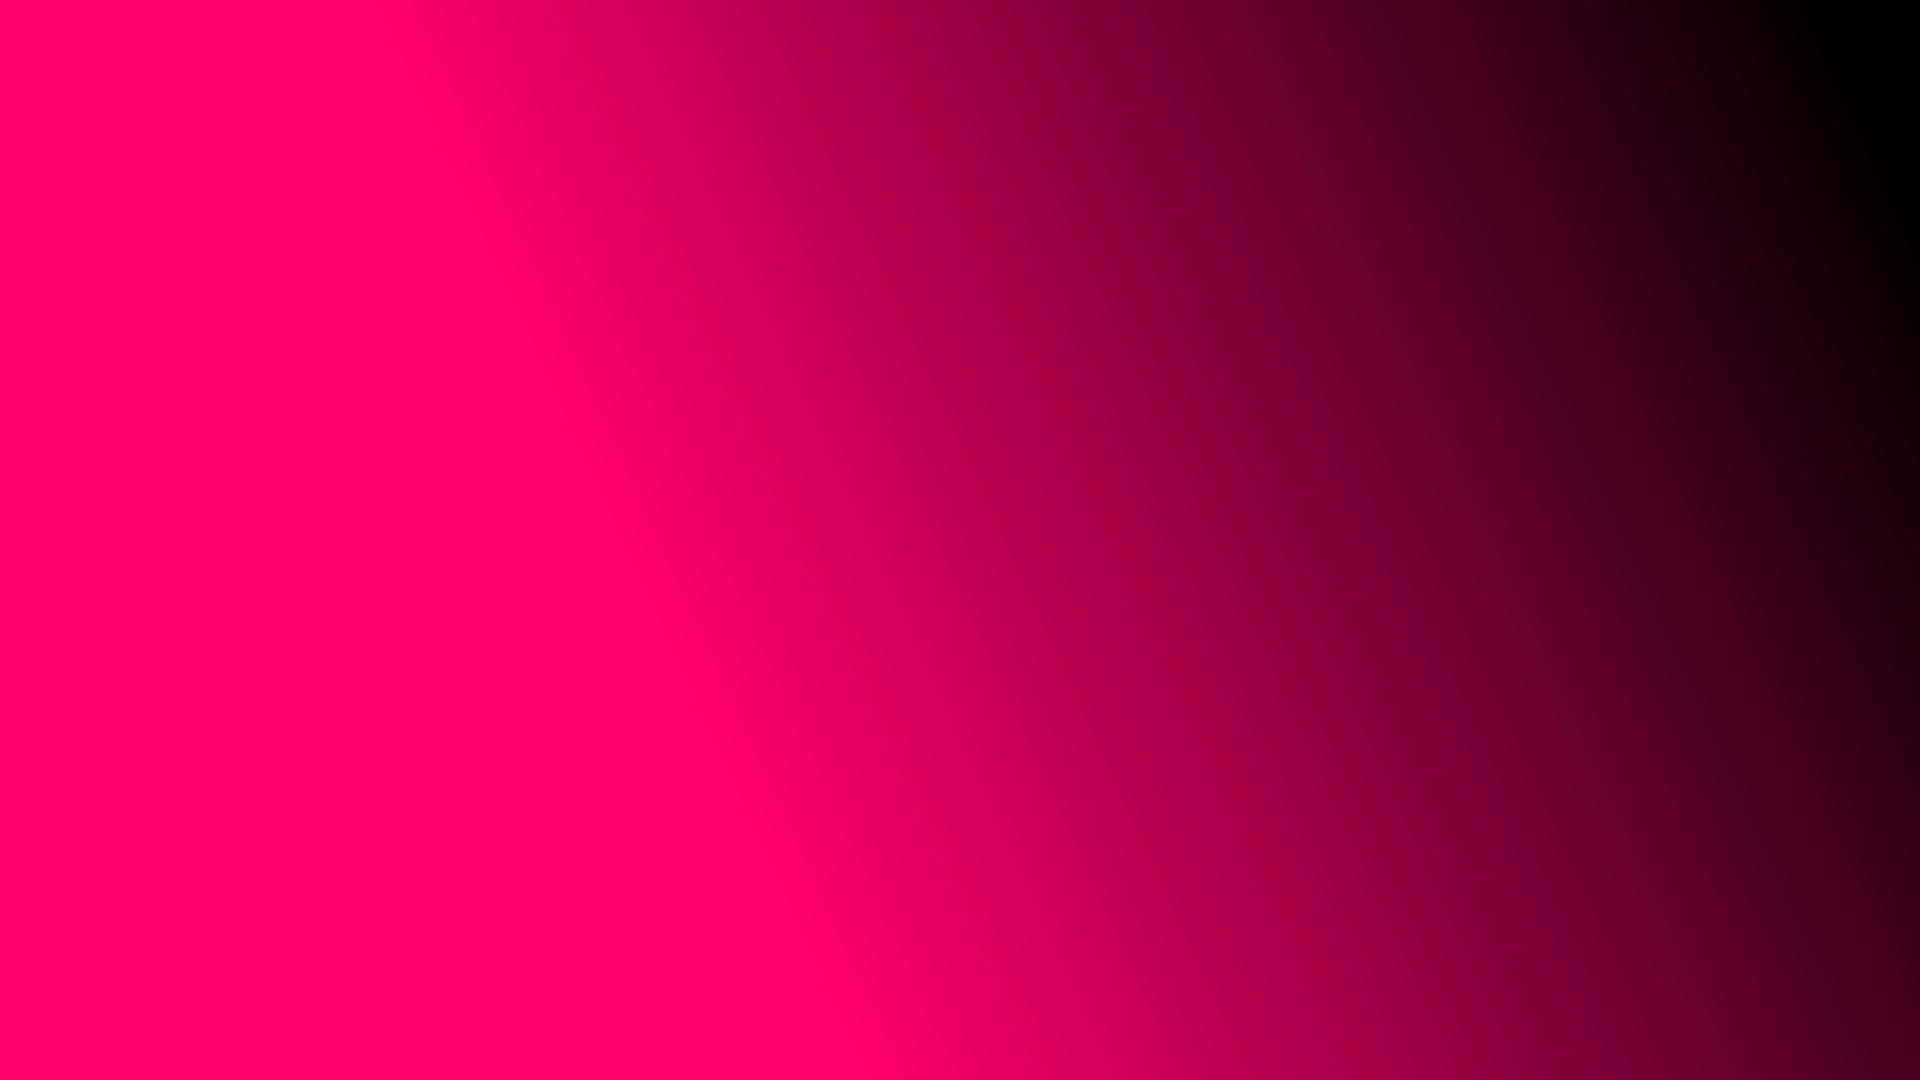 Pink Background 5103 1920x1080 px